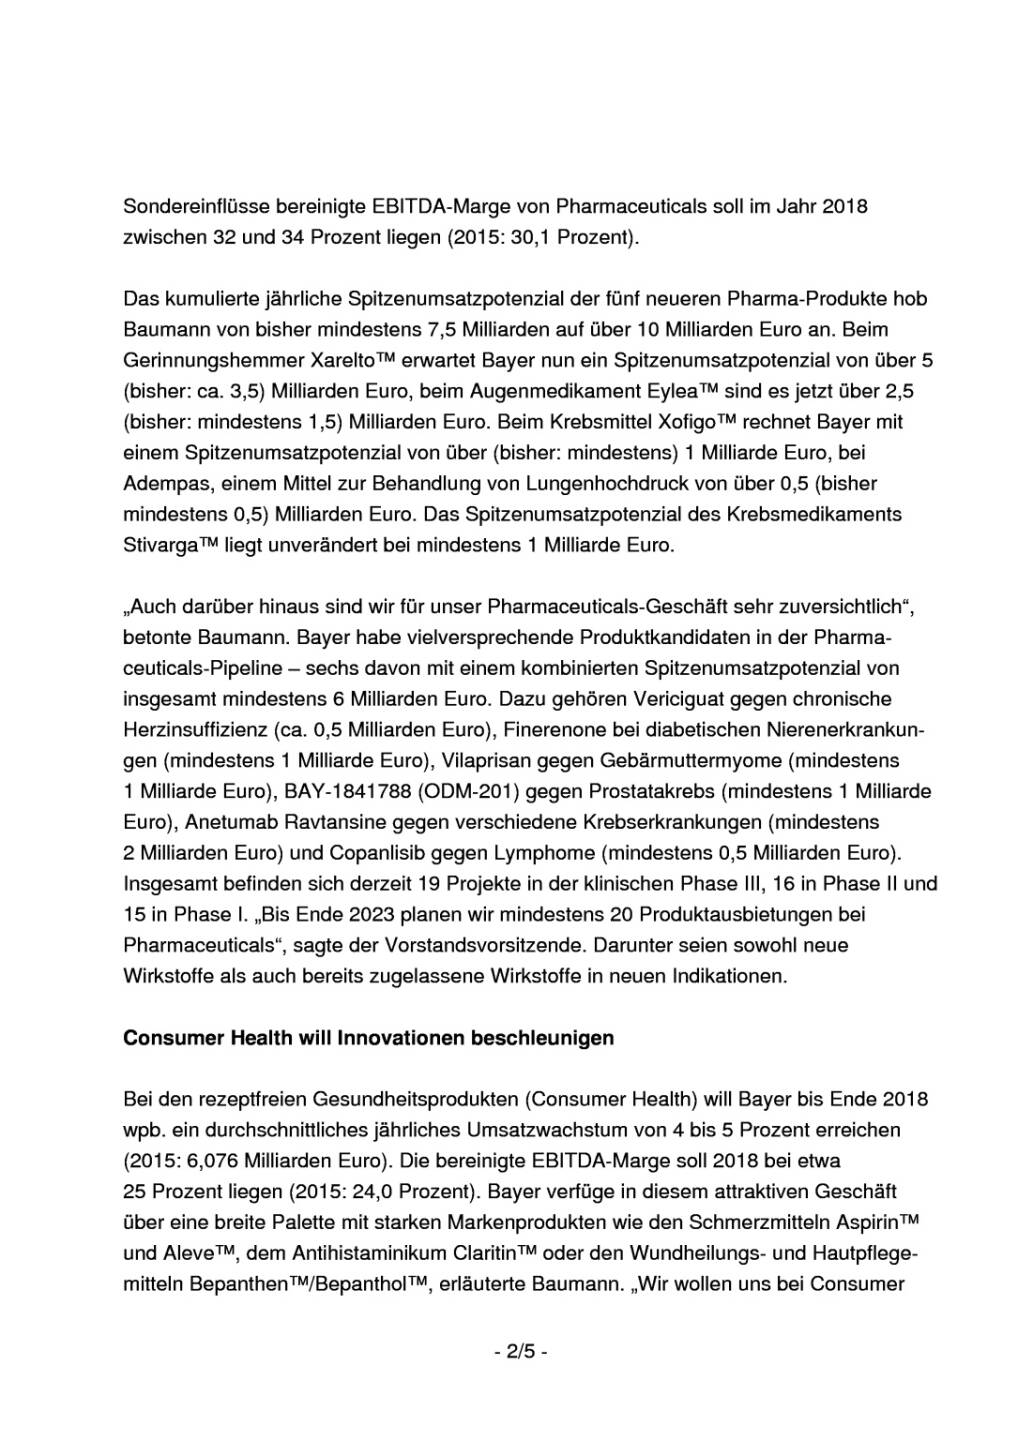 Bayer: Investorenkonferenz „Meet Management“, Seite 2/5, komplettes Dokument unter http://boerse-social.com/static/uploads/file_1797_bayer_investorenkonferenz_meet_management.pdf